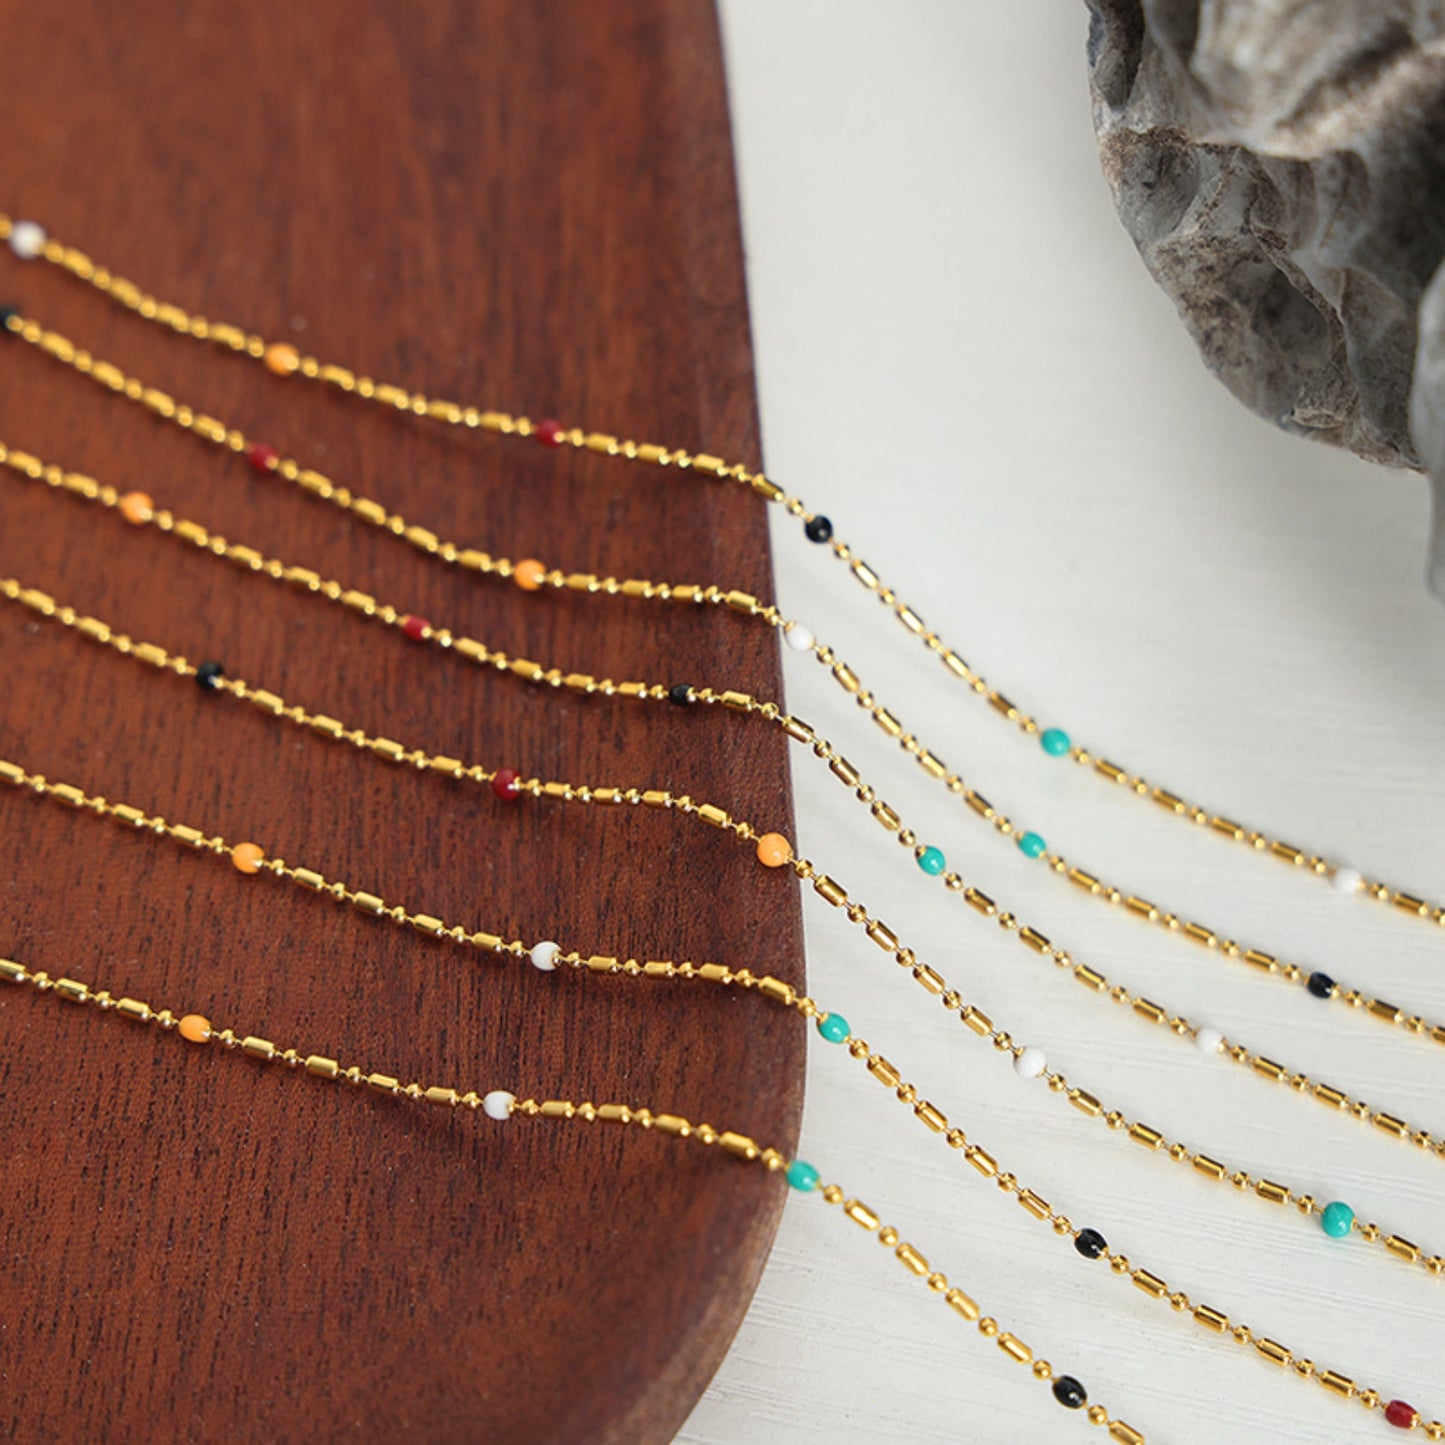 Halskette mit 18 Karat vergoldeten Öltropfenperlen